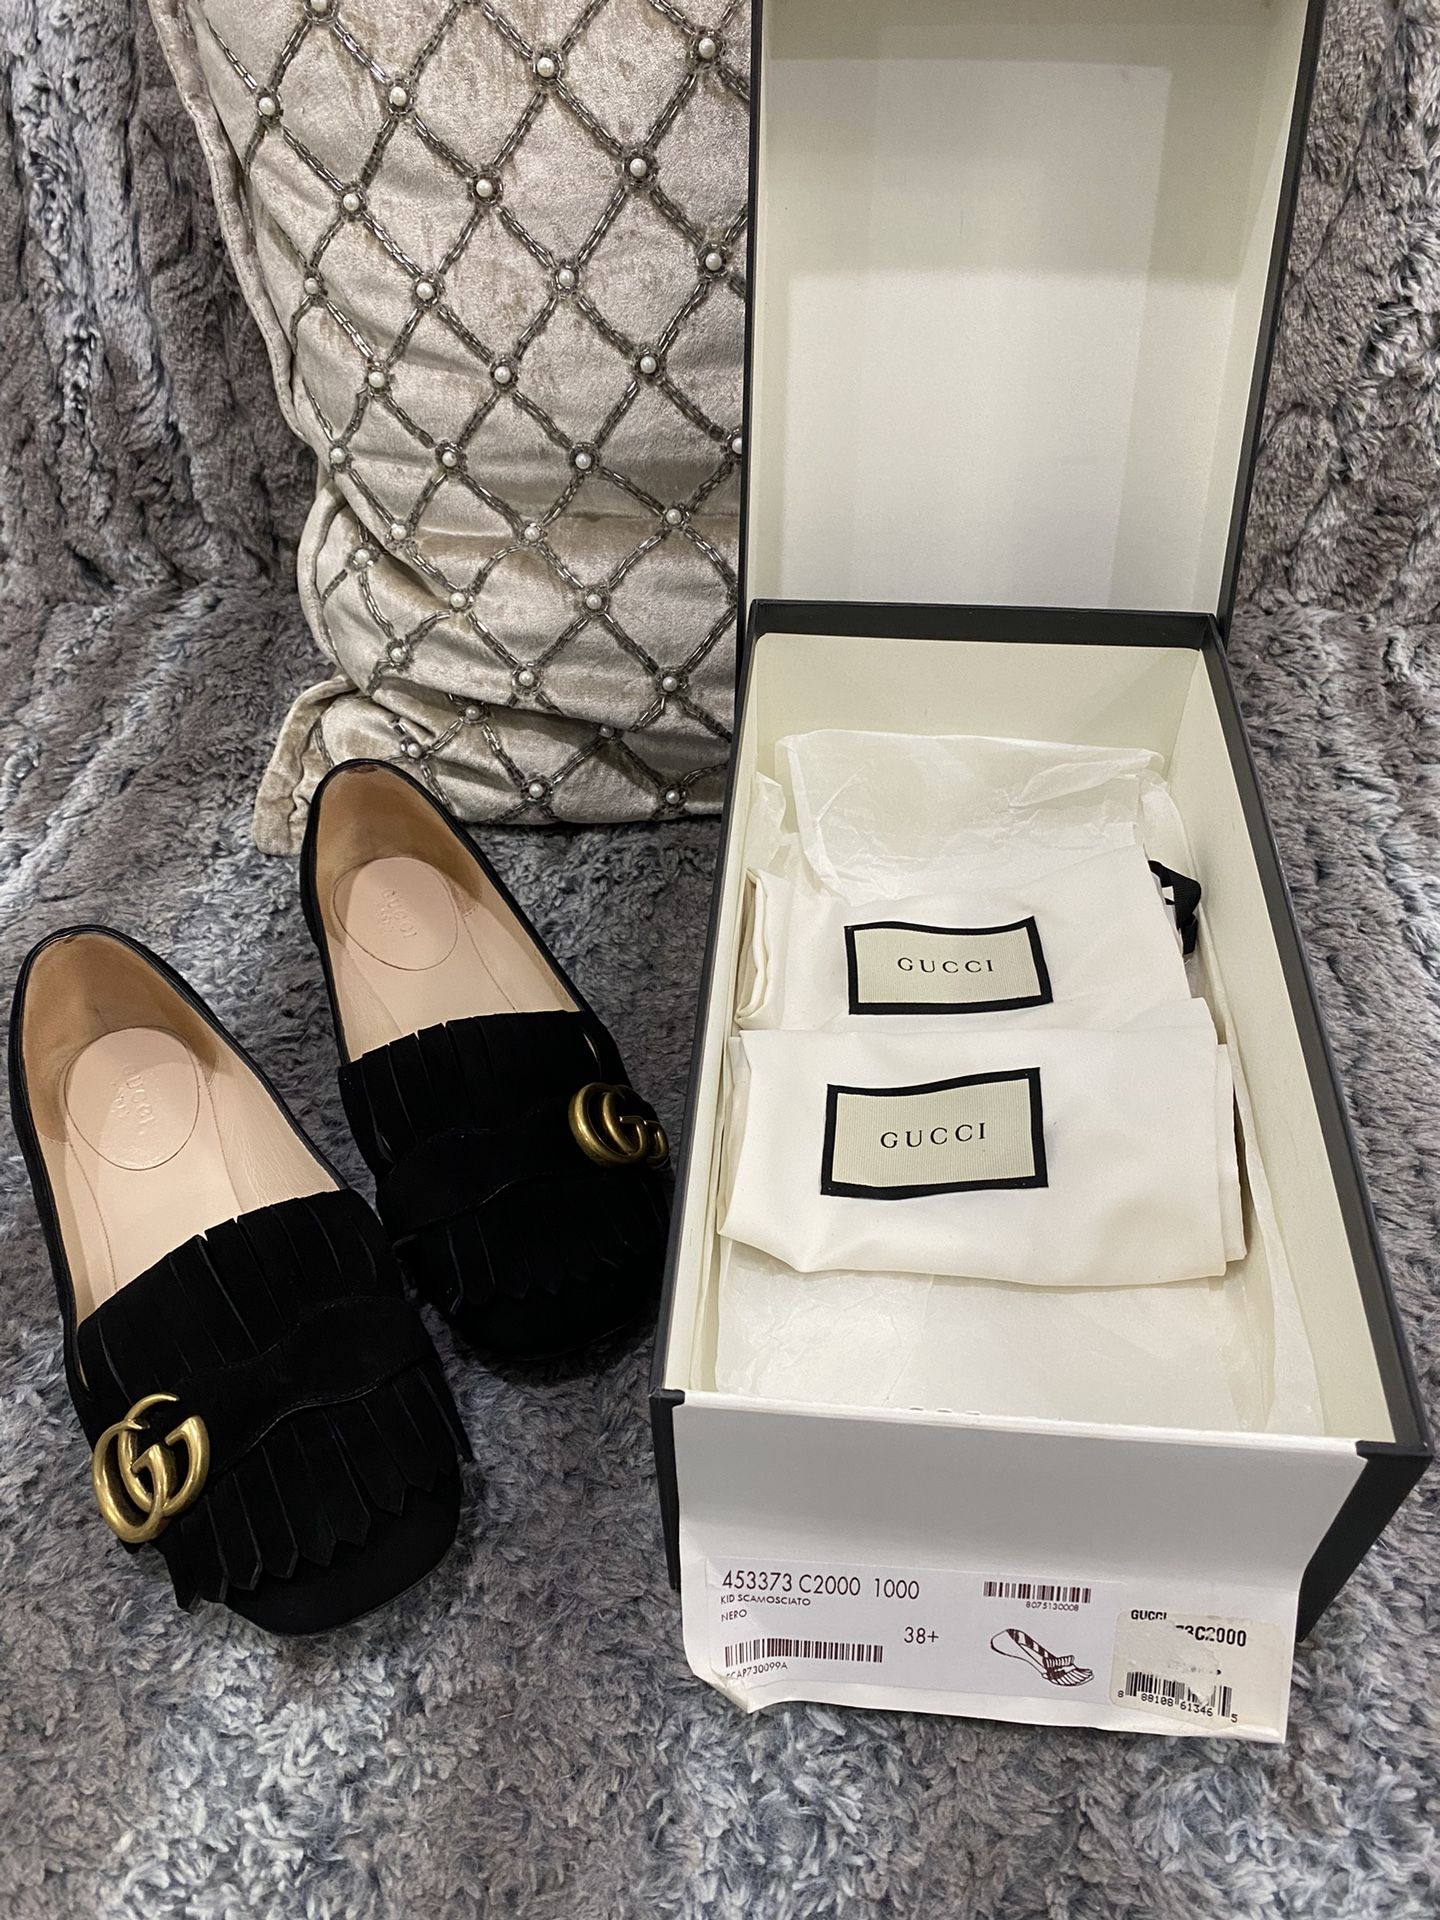 Authentic Gucci Marmont Suede Flat Shoes Size 38.5 